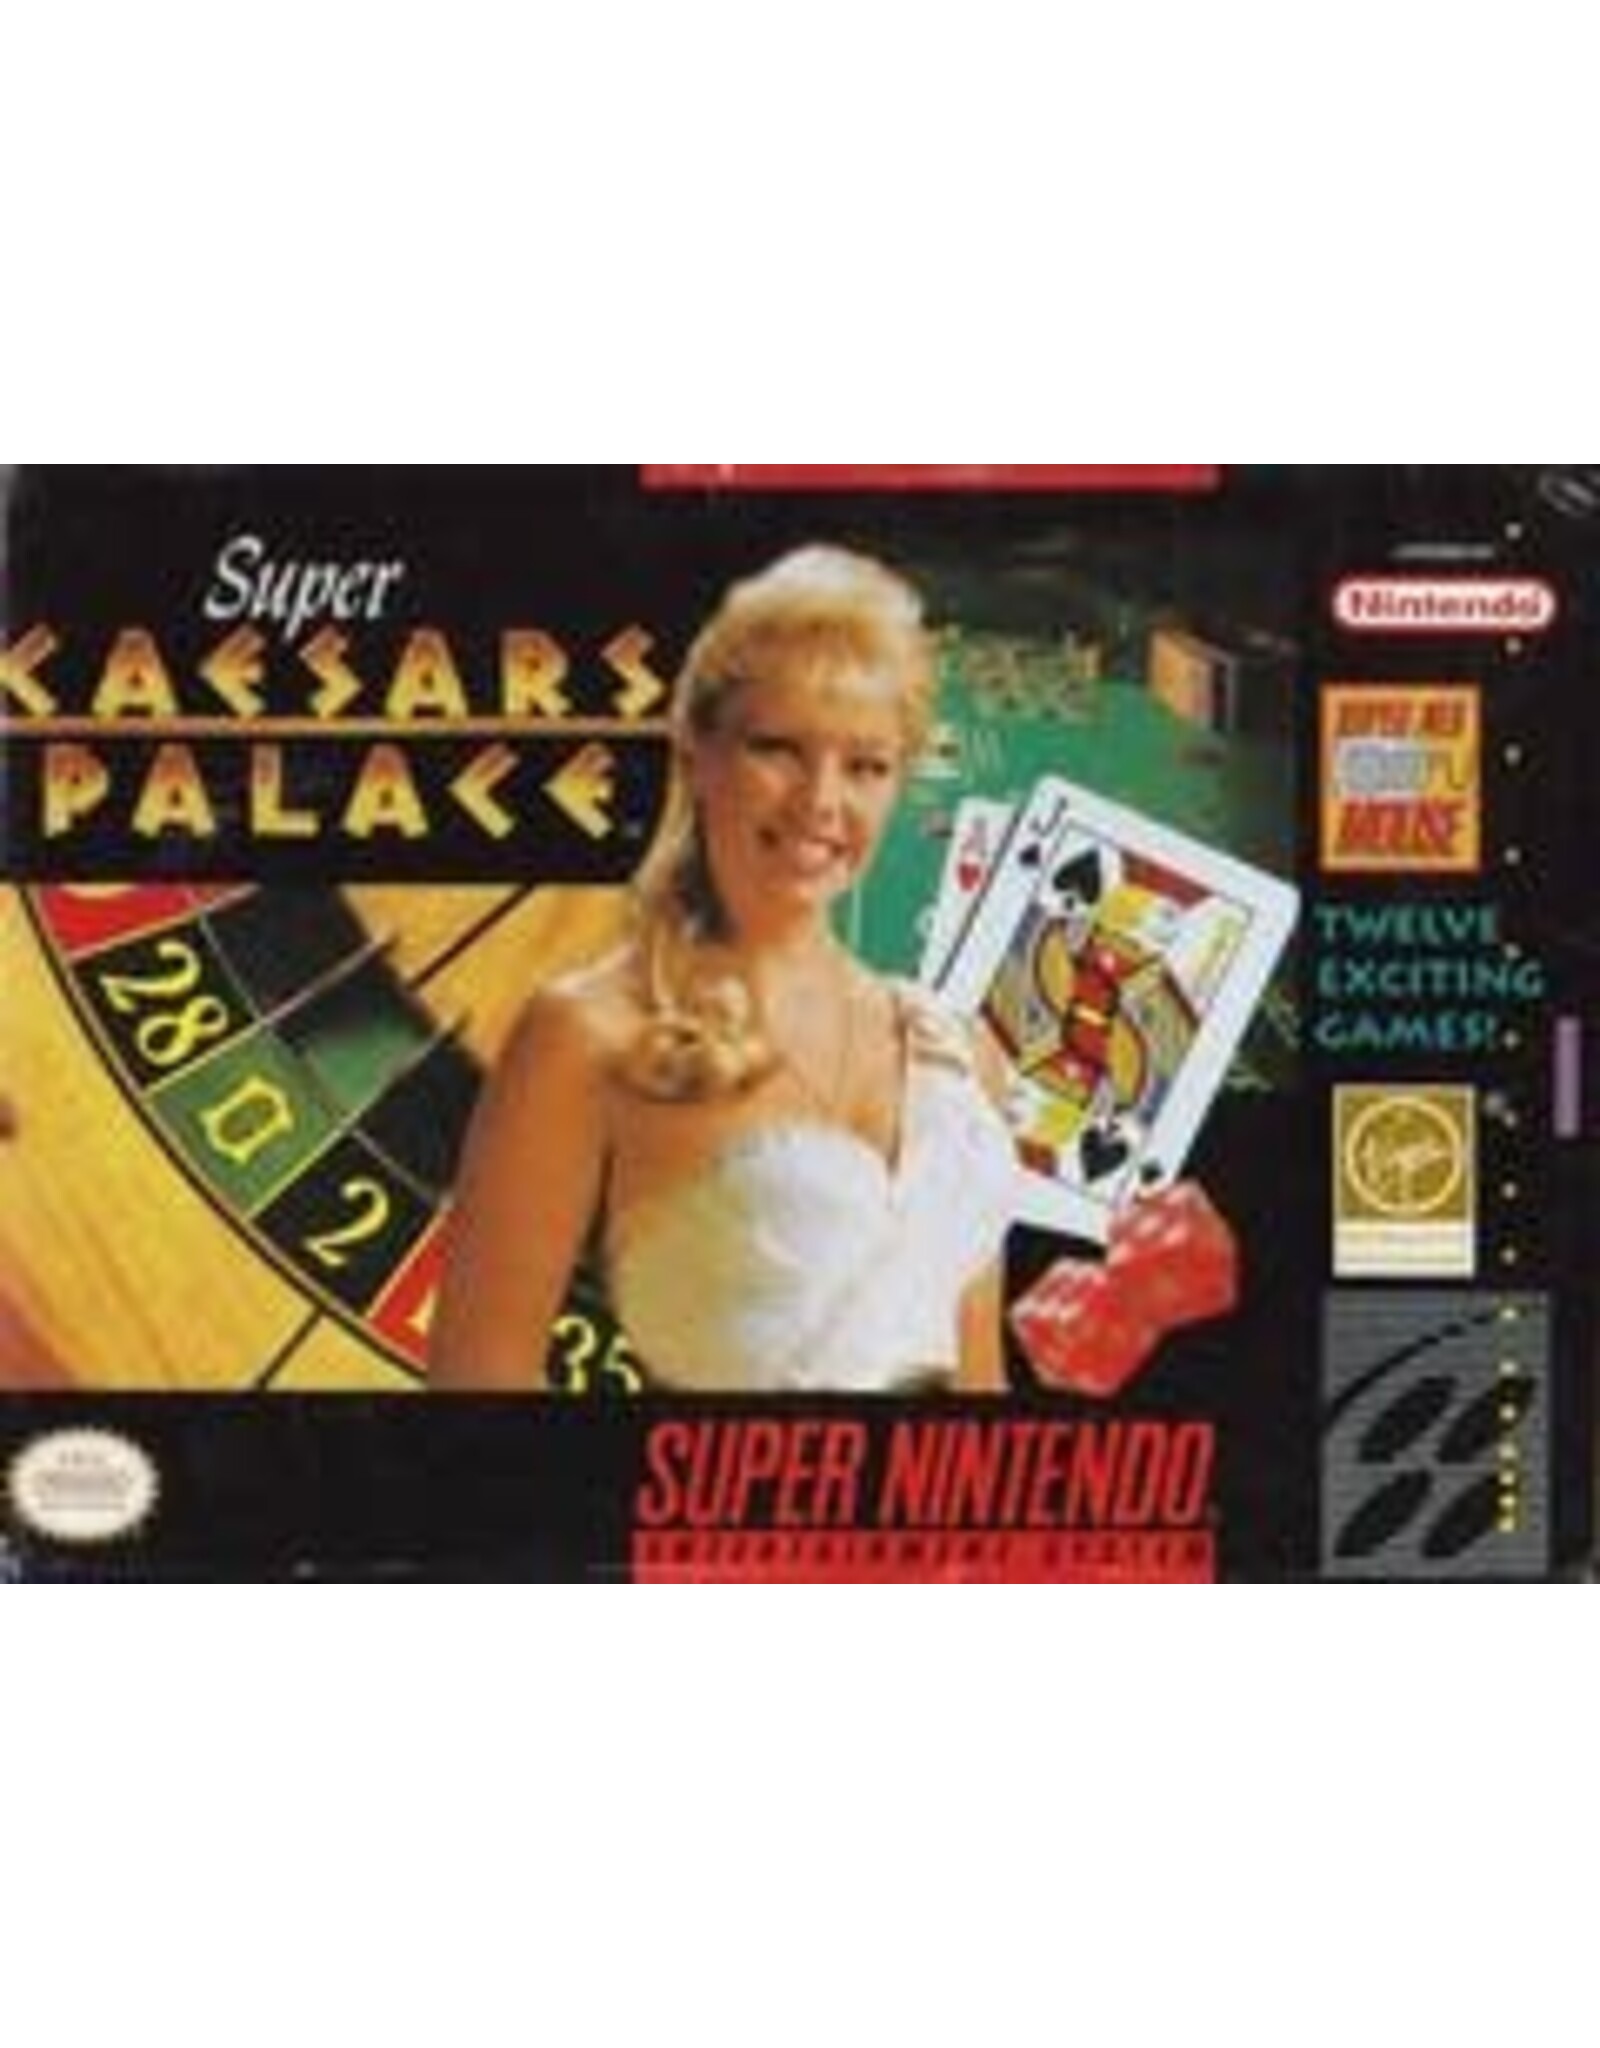 Super Nintendo Super Caesar's Palace (Cart Only)